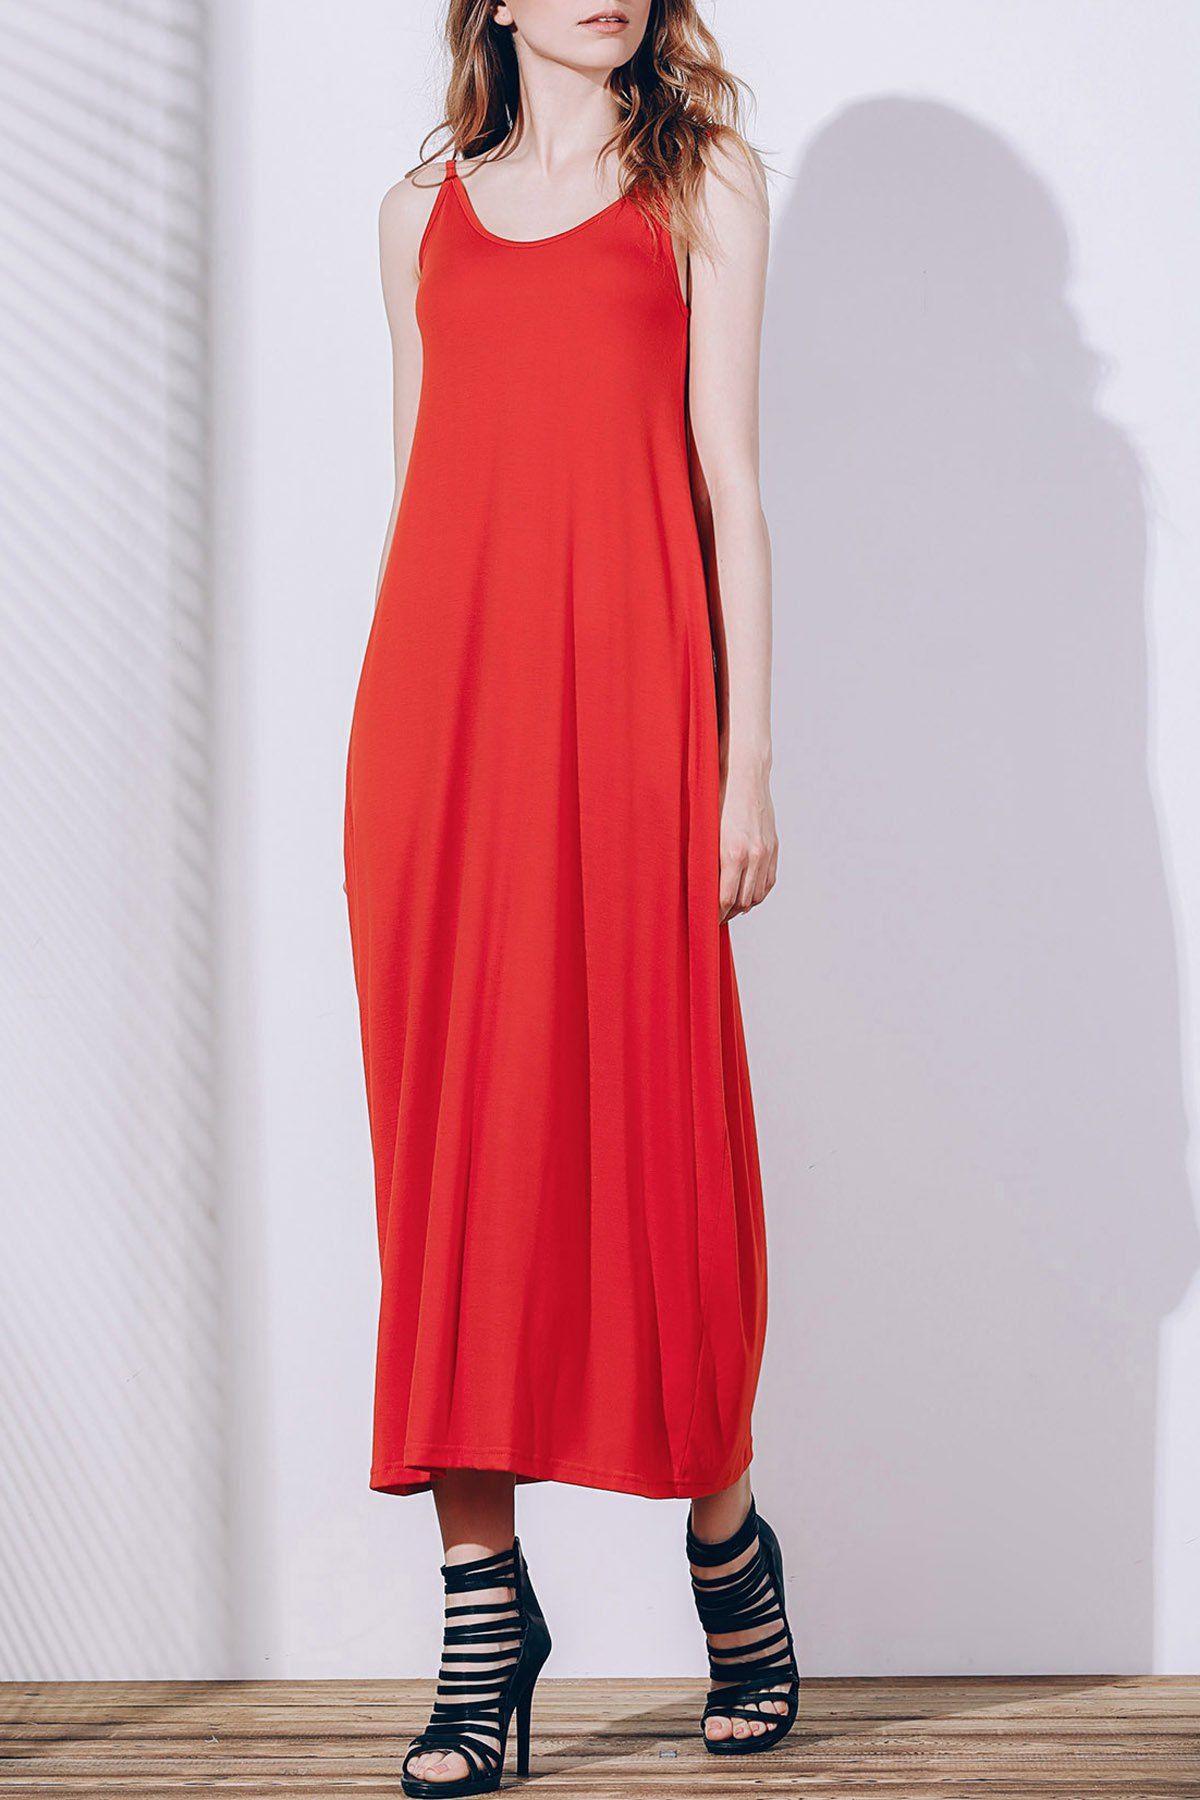 Stylish Spaghetti Strap Solid Color Pocket Design Women's Dress - ORANGE RED S